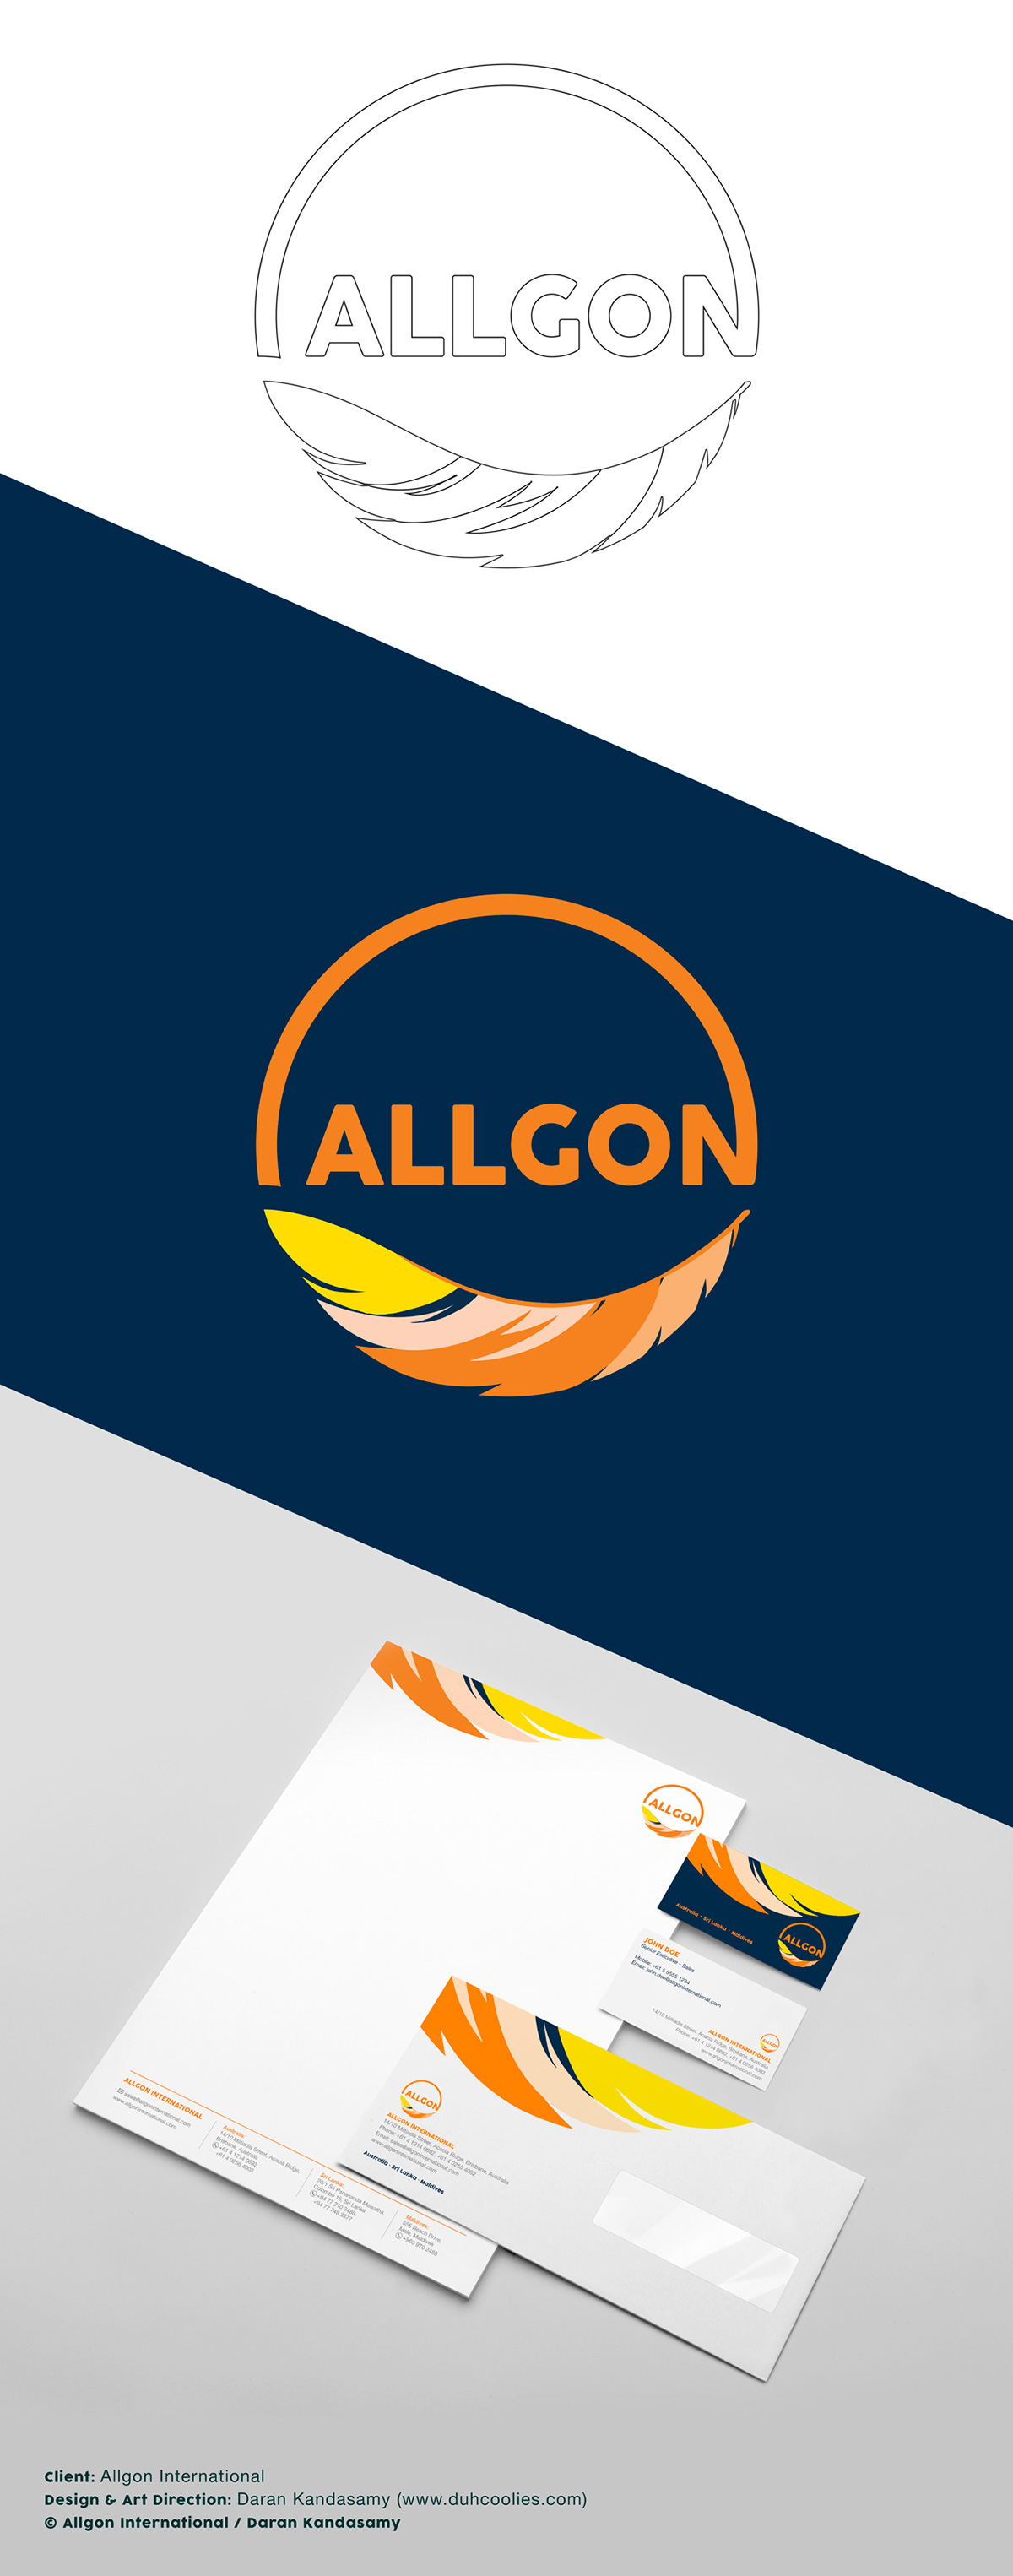 Allgon Pest Control International logo Stationery feather orange blue circle ring